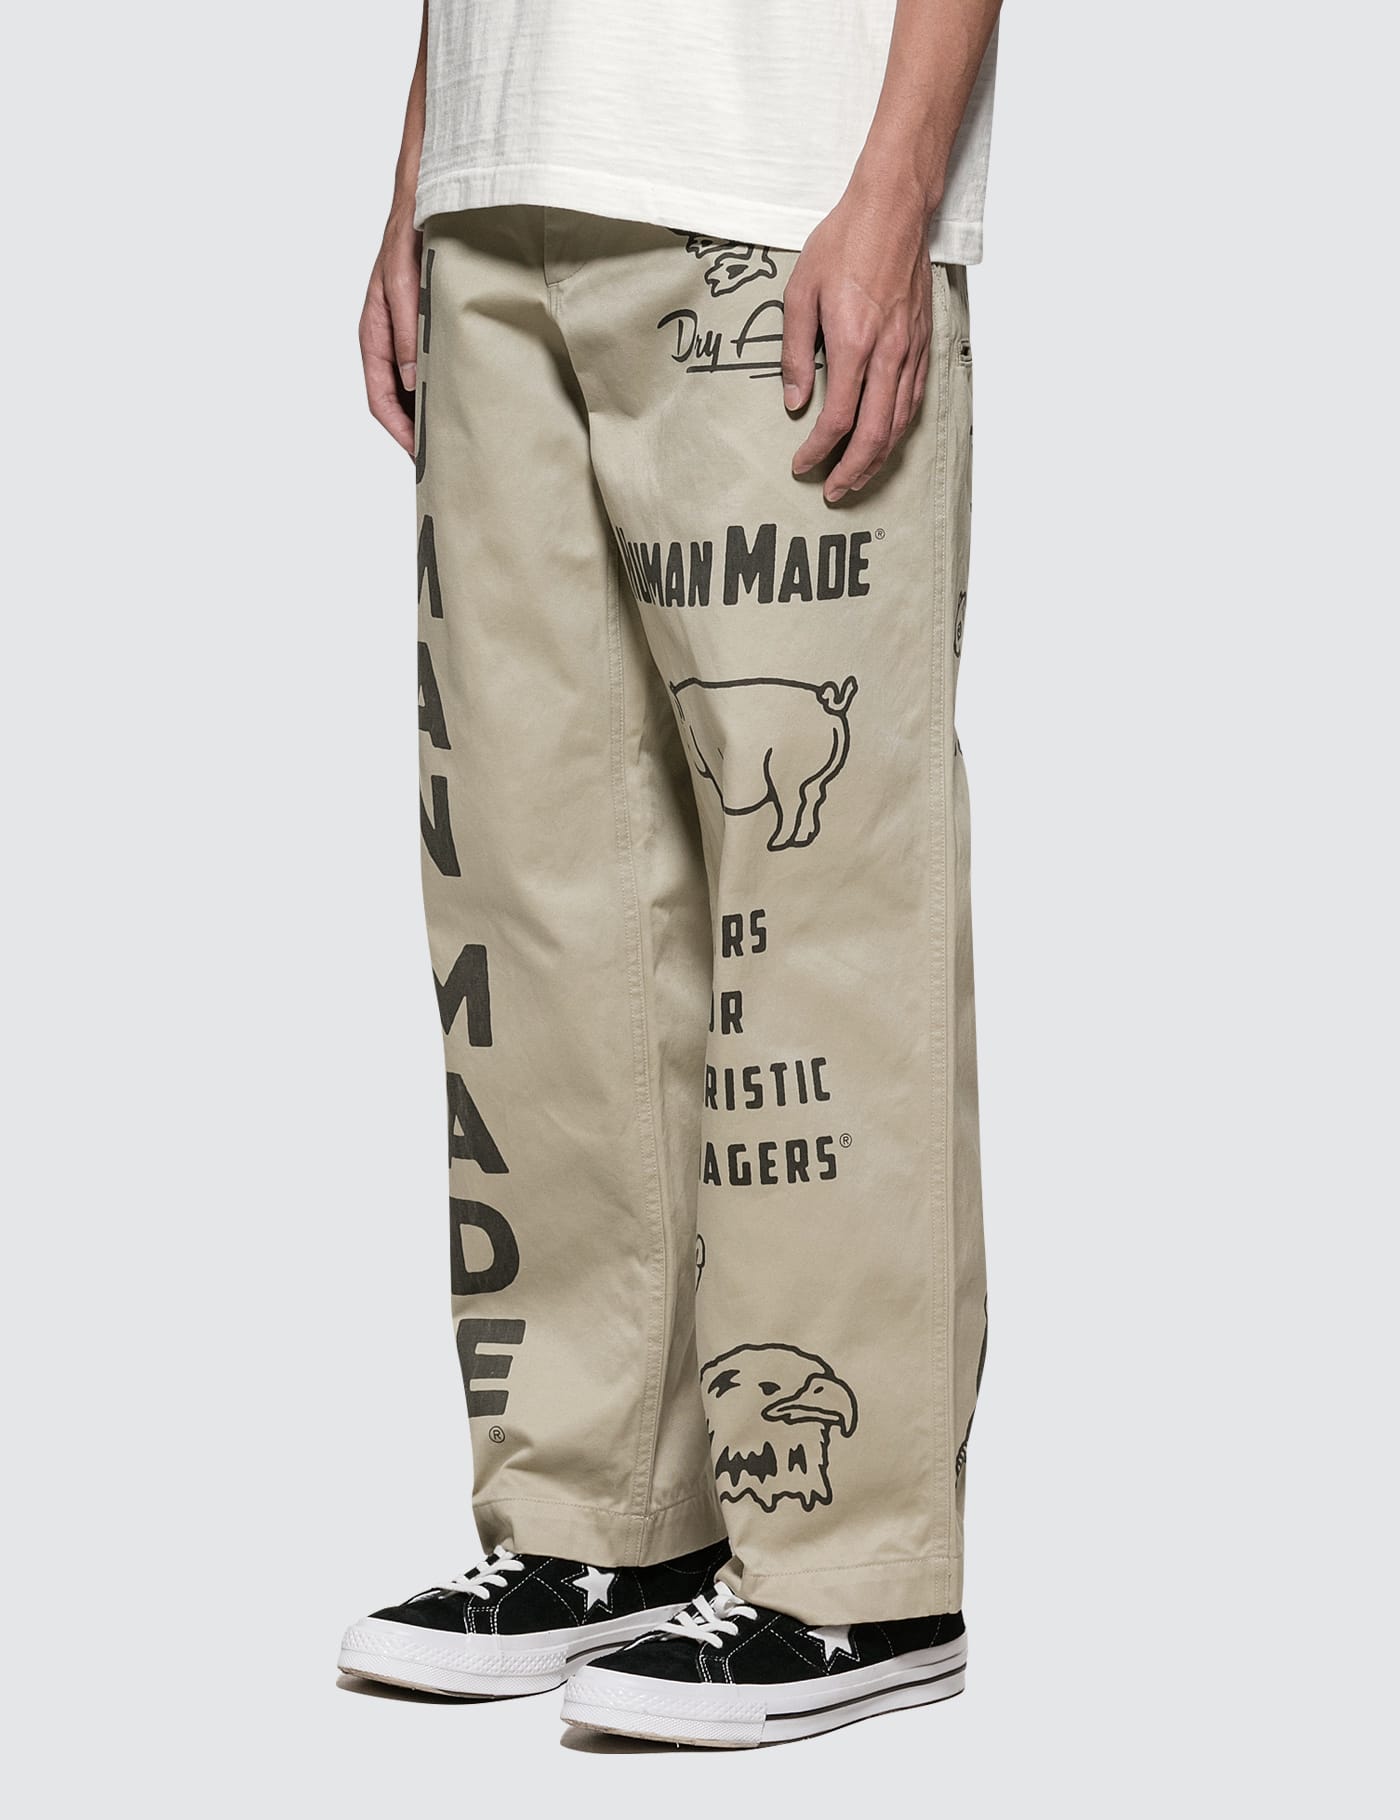 Human Made - Military Print Chino | HBX - Globally Curated Fashion 